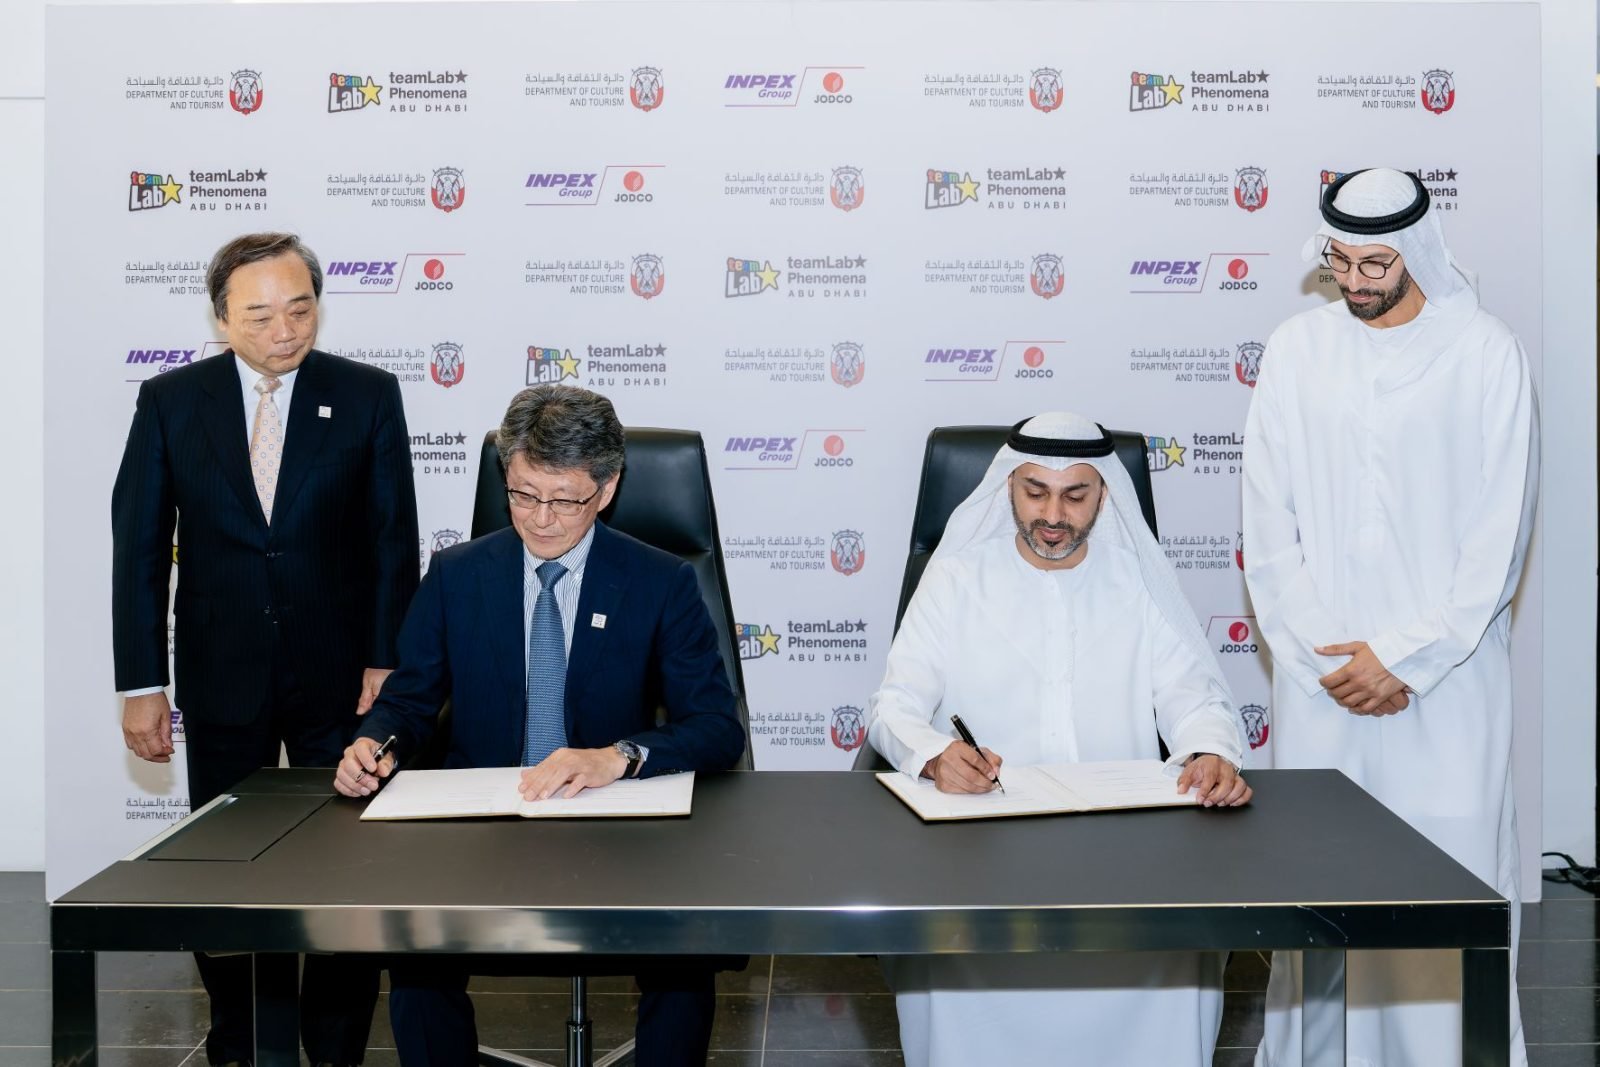 DCT Abu Dhabi signs MoYU with sponsorship of Inpex fpr teamlab Phenomena Abu Dhabi